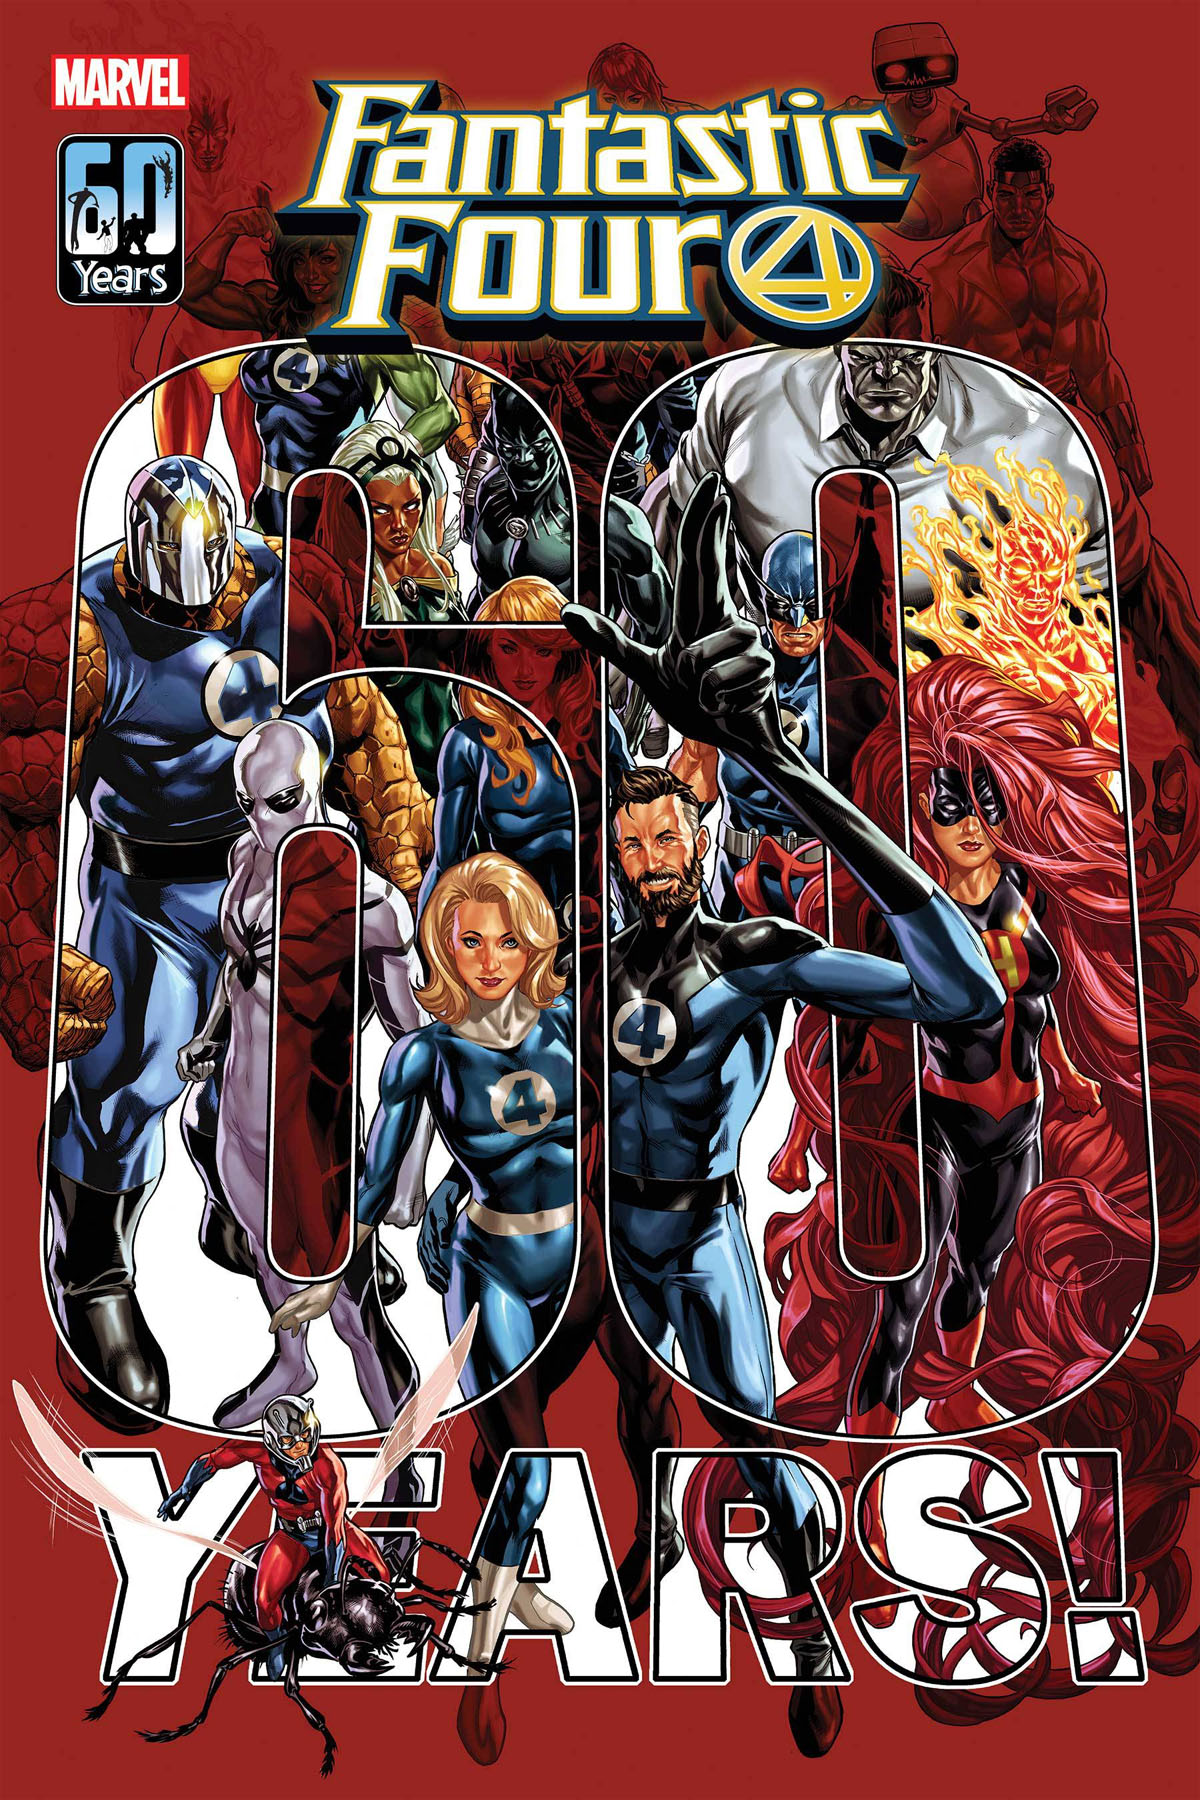 Fantastic Four #35 cover